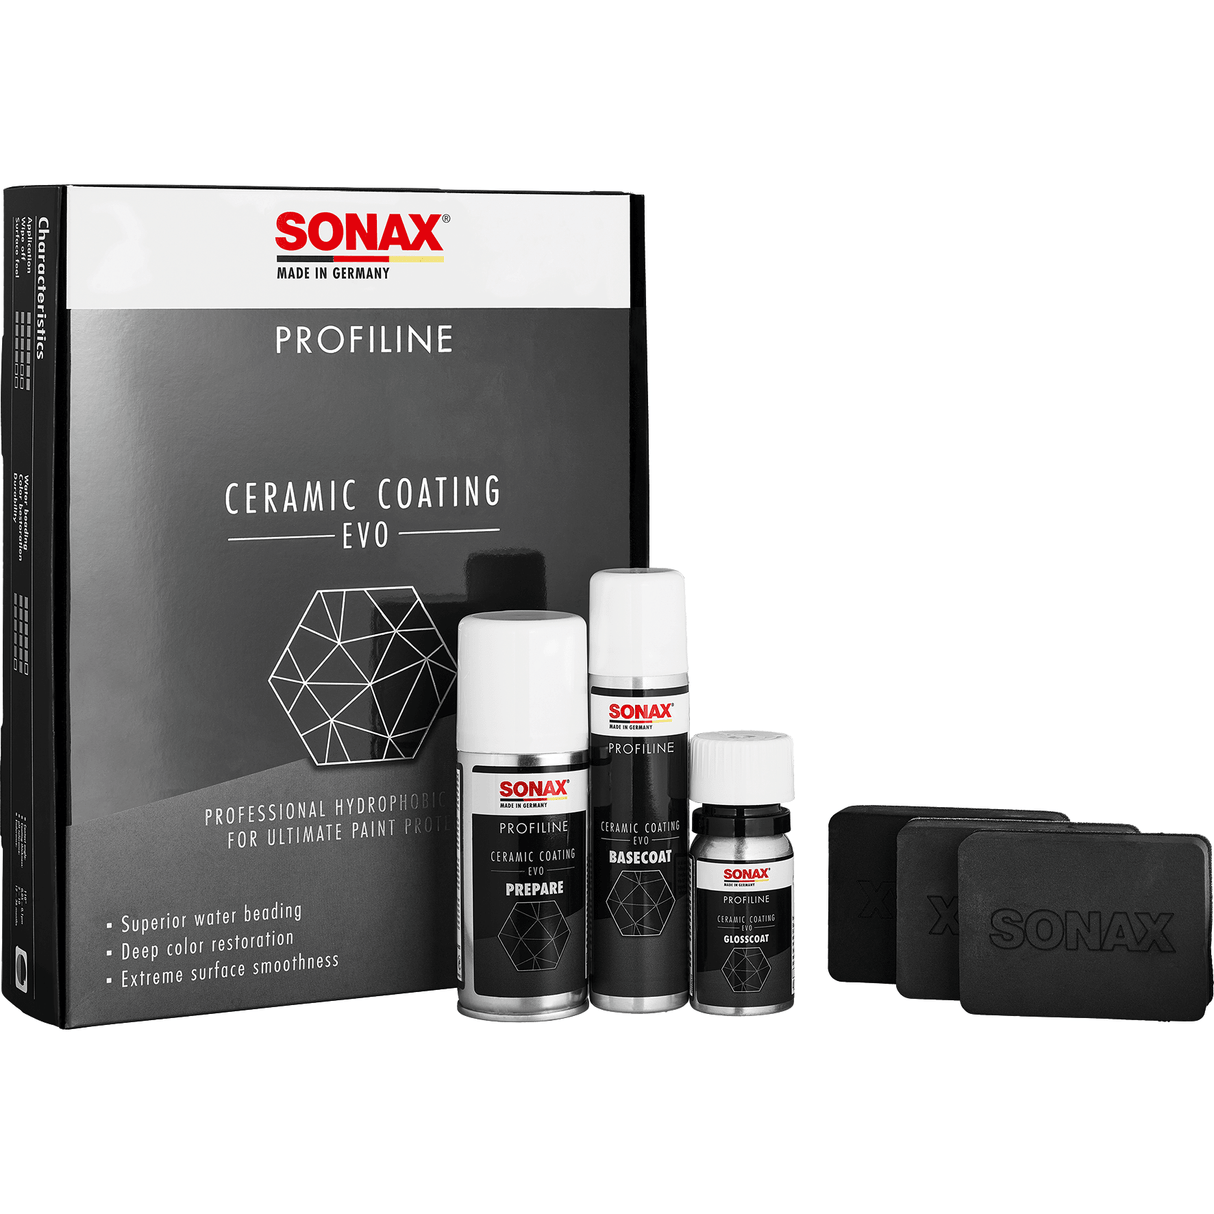 SONAX Profiline CeramicCoating EVO - Xpert Cleaning